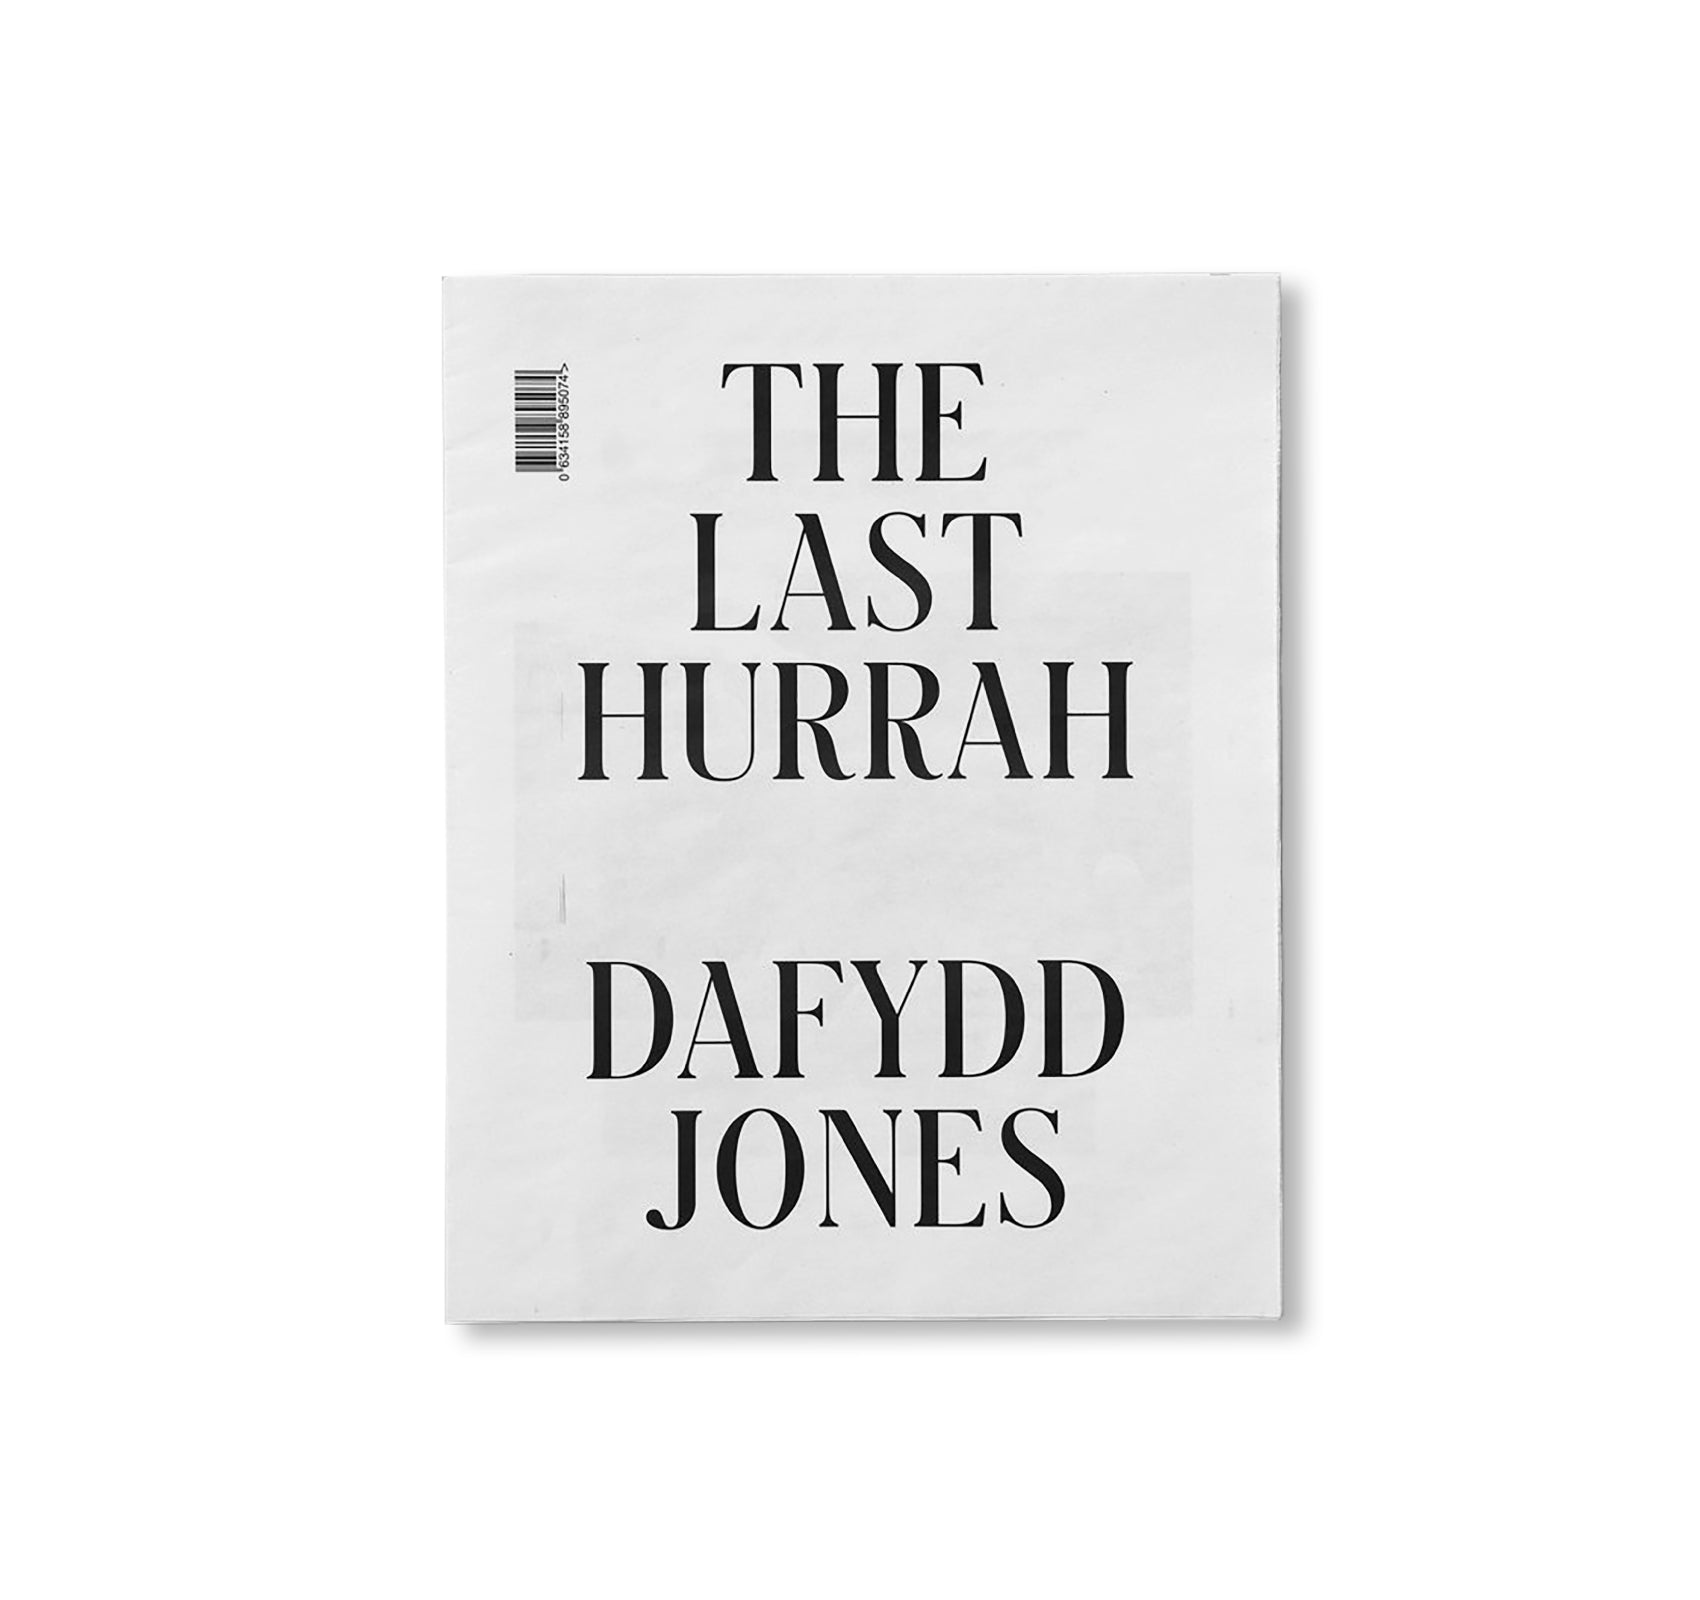 THE LAST HURRAH by Dafydd Jones